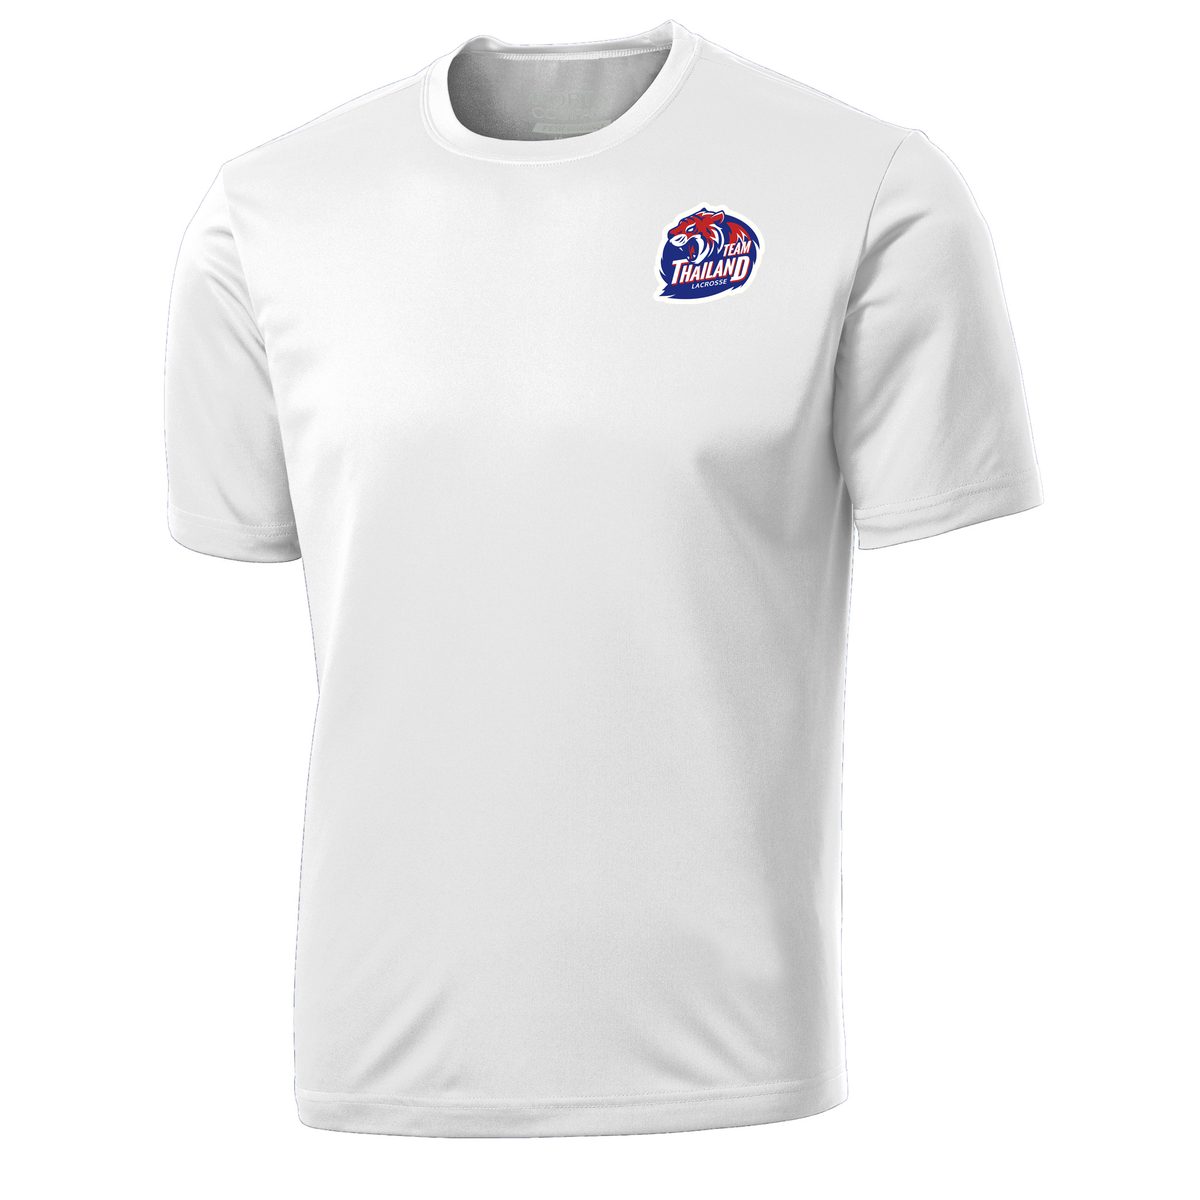 Thailand Lacrosse Performance T-Shirt